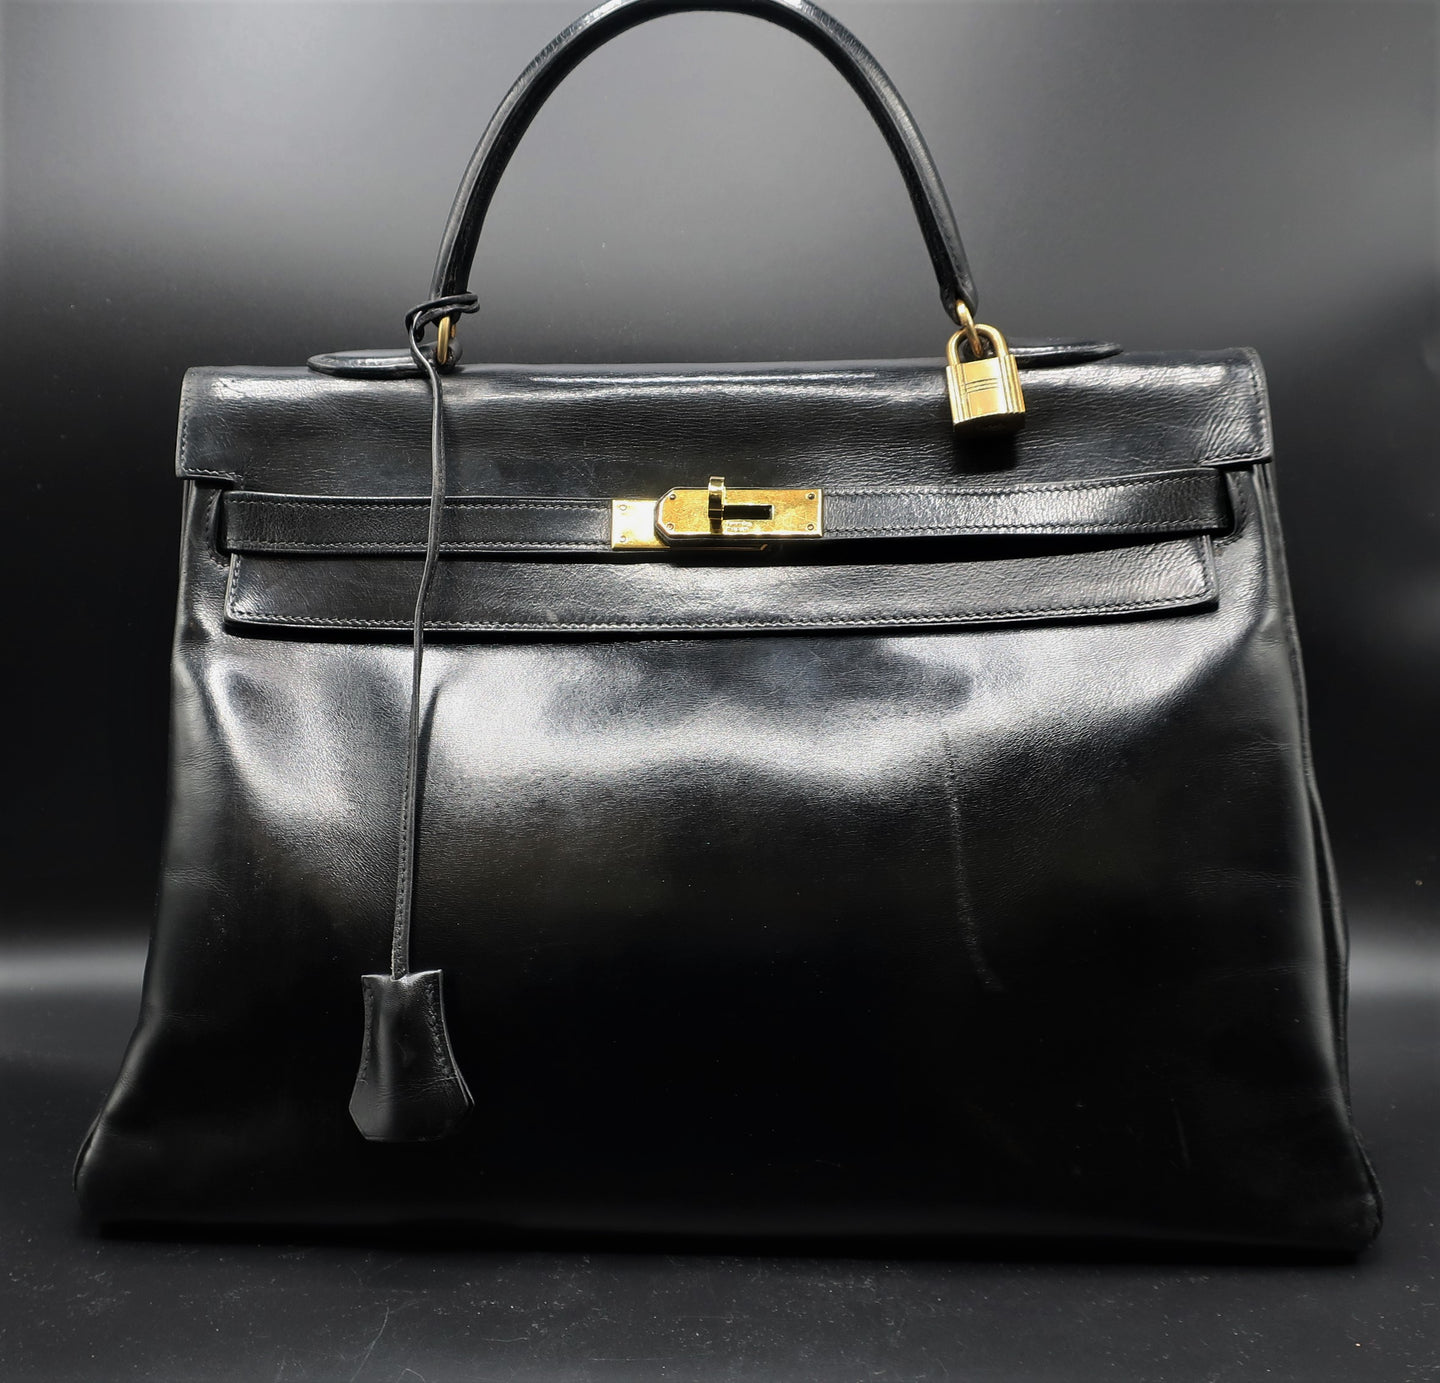 Hermès 35 CM Black Kelly Bag